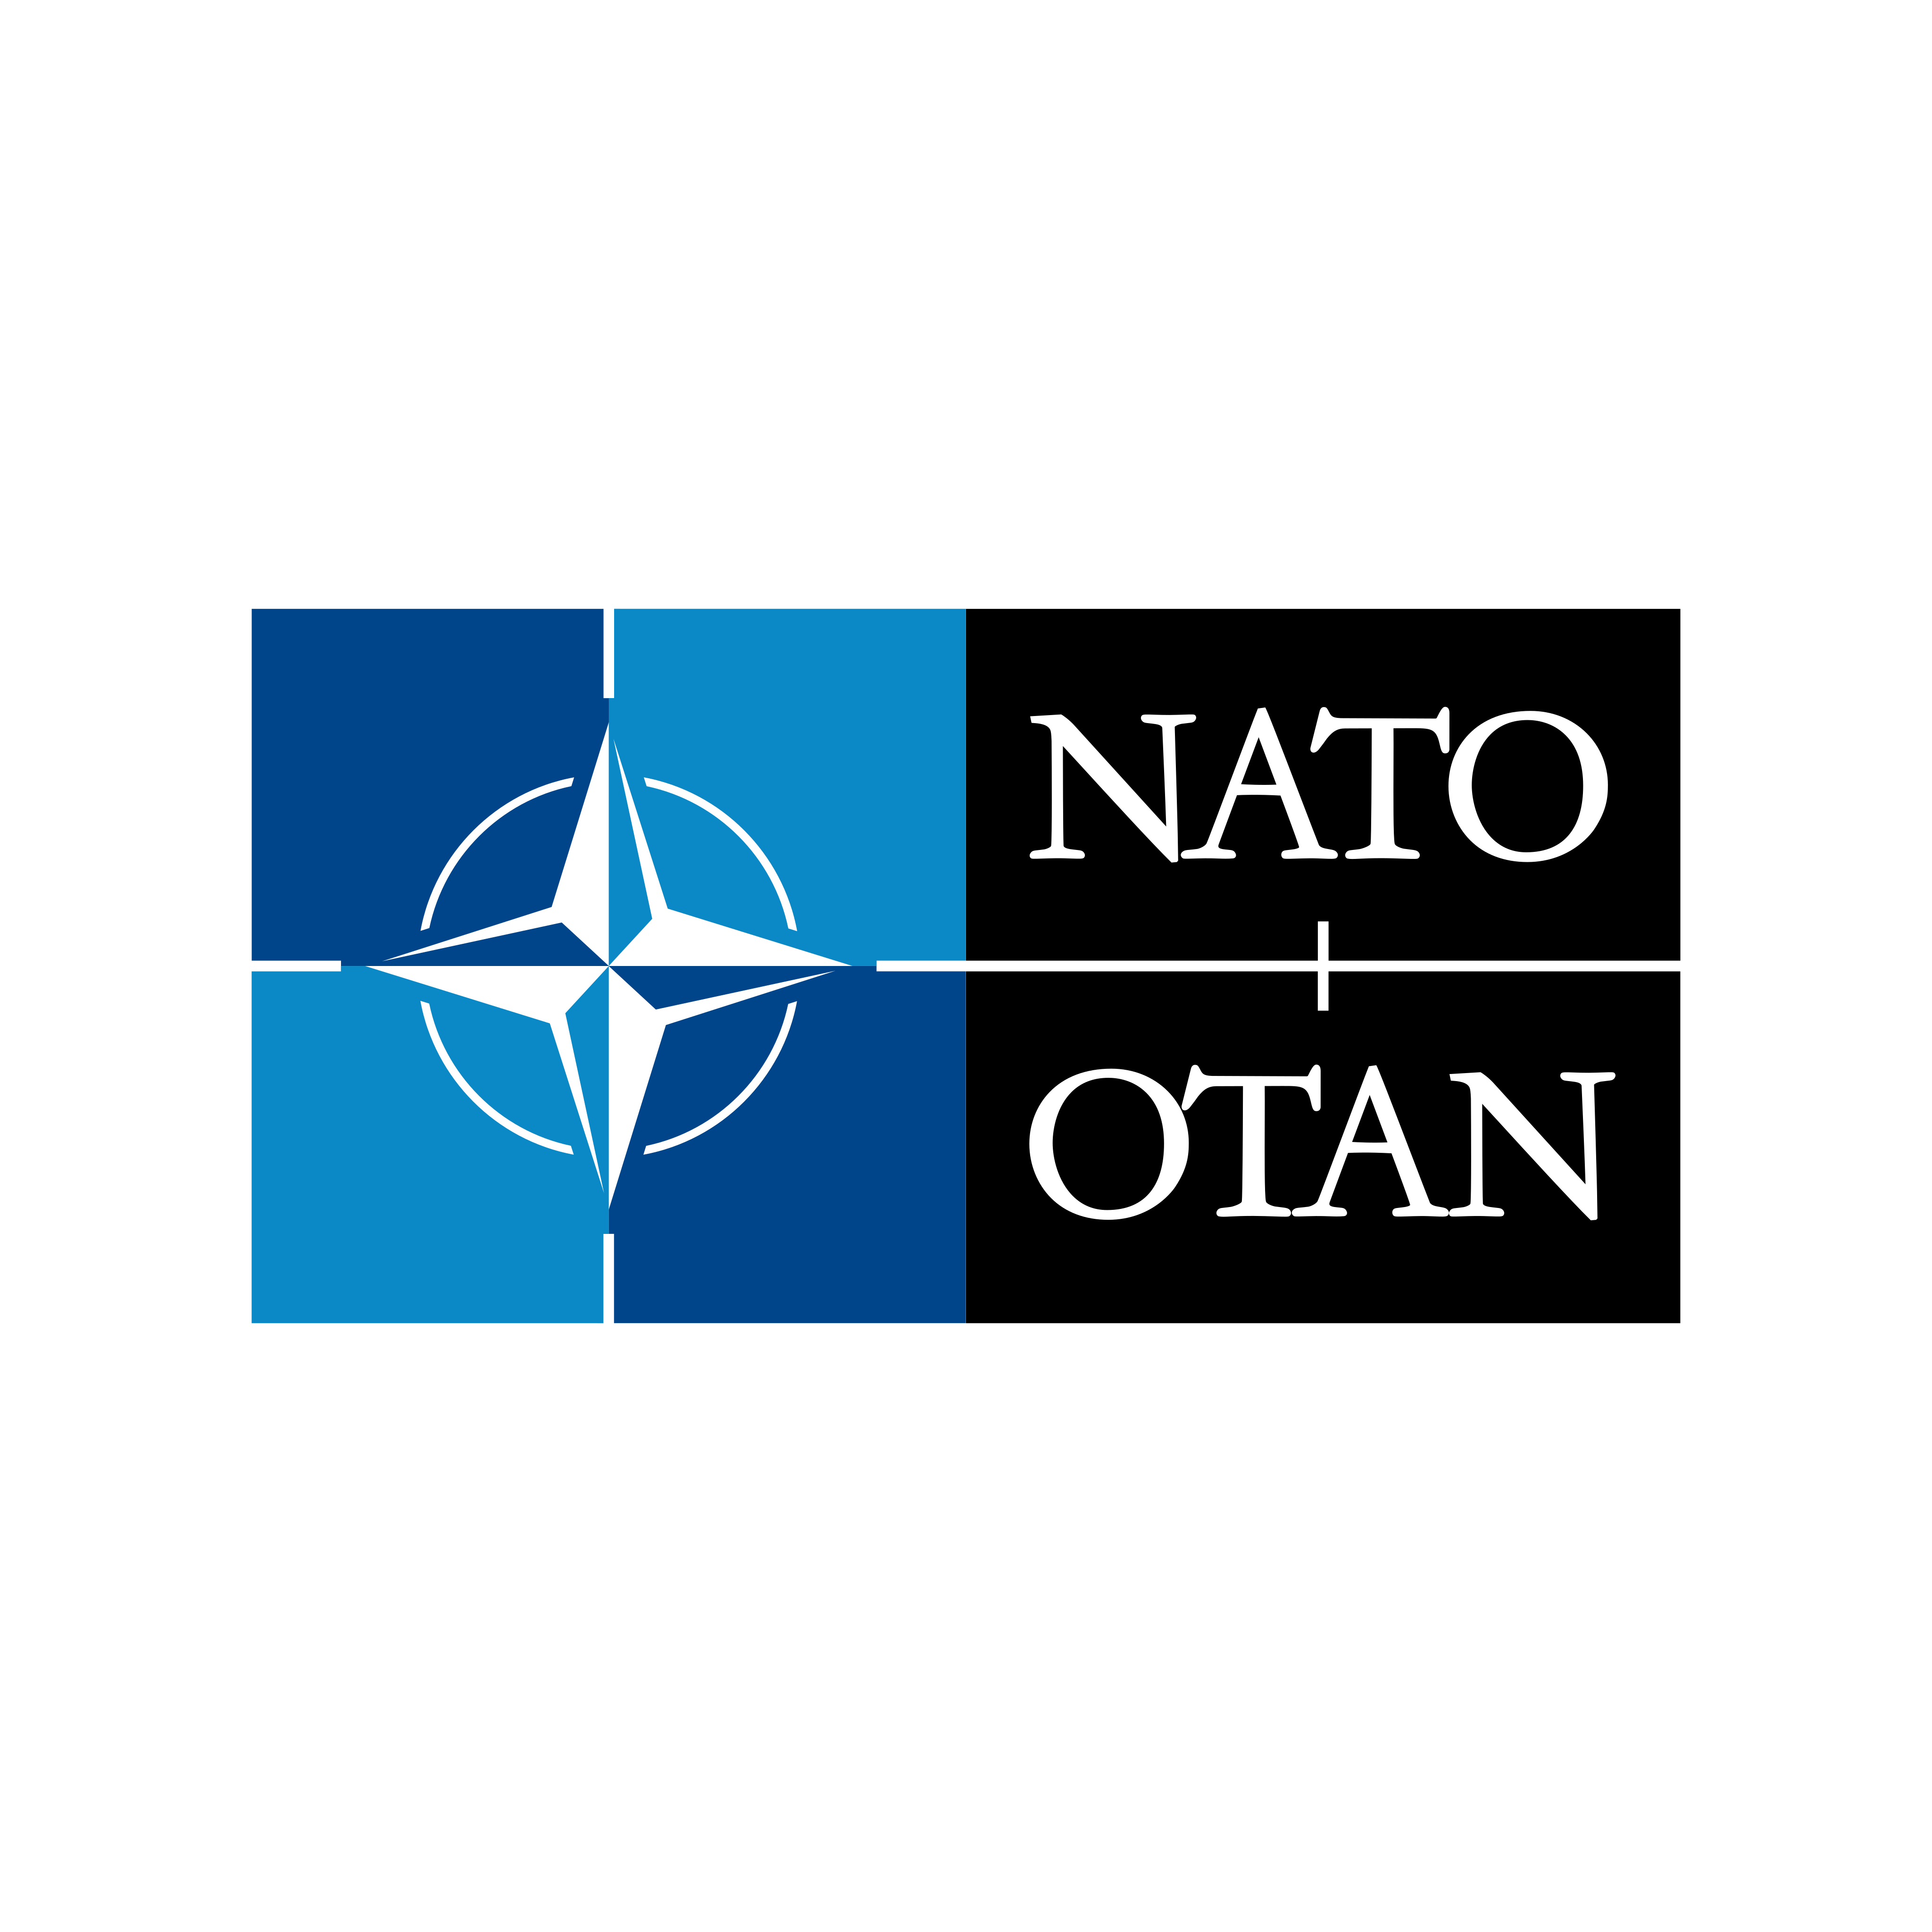 nato otan logo 0 - Nato Logo - Otan Logo